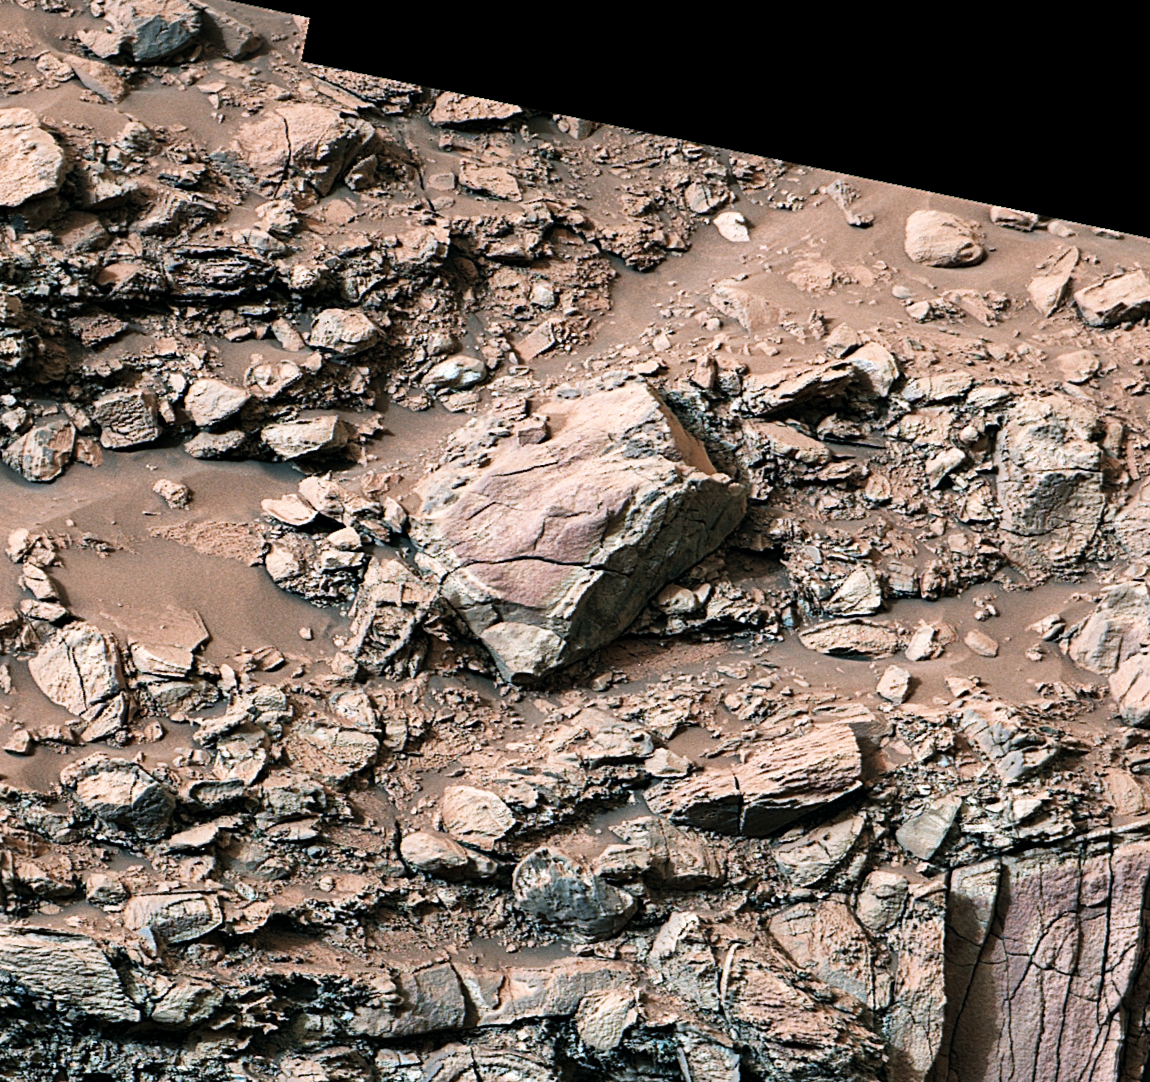 NASAのキュリオシティ・ローバー、火星の岩の中で驚きの発見をする(NASA’s Curiosity Rover Discovers a Surprise in a Martian Rock)